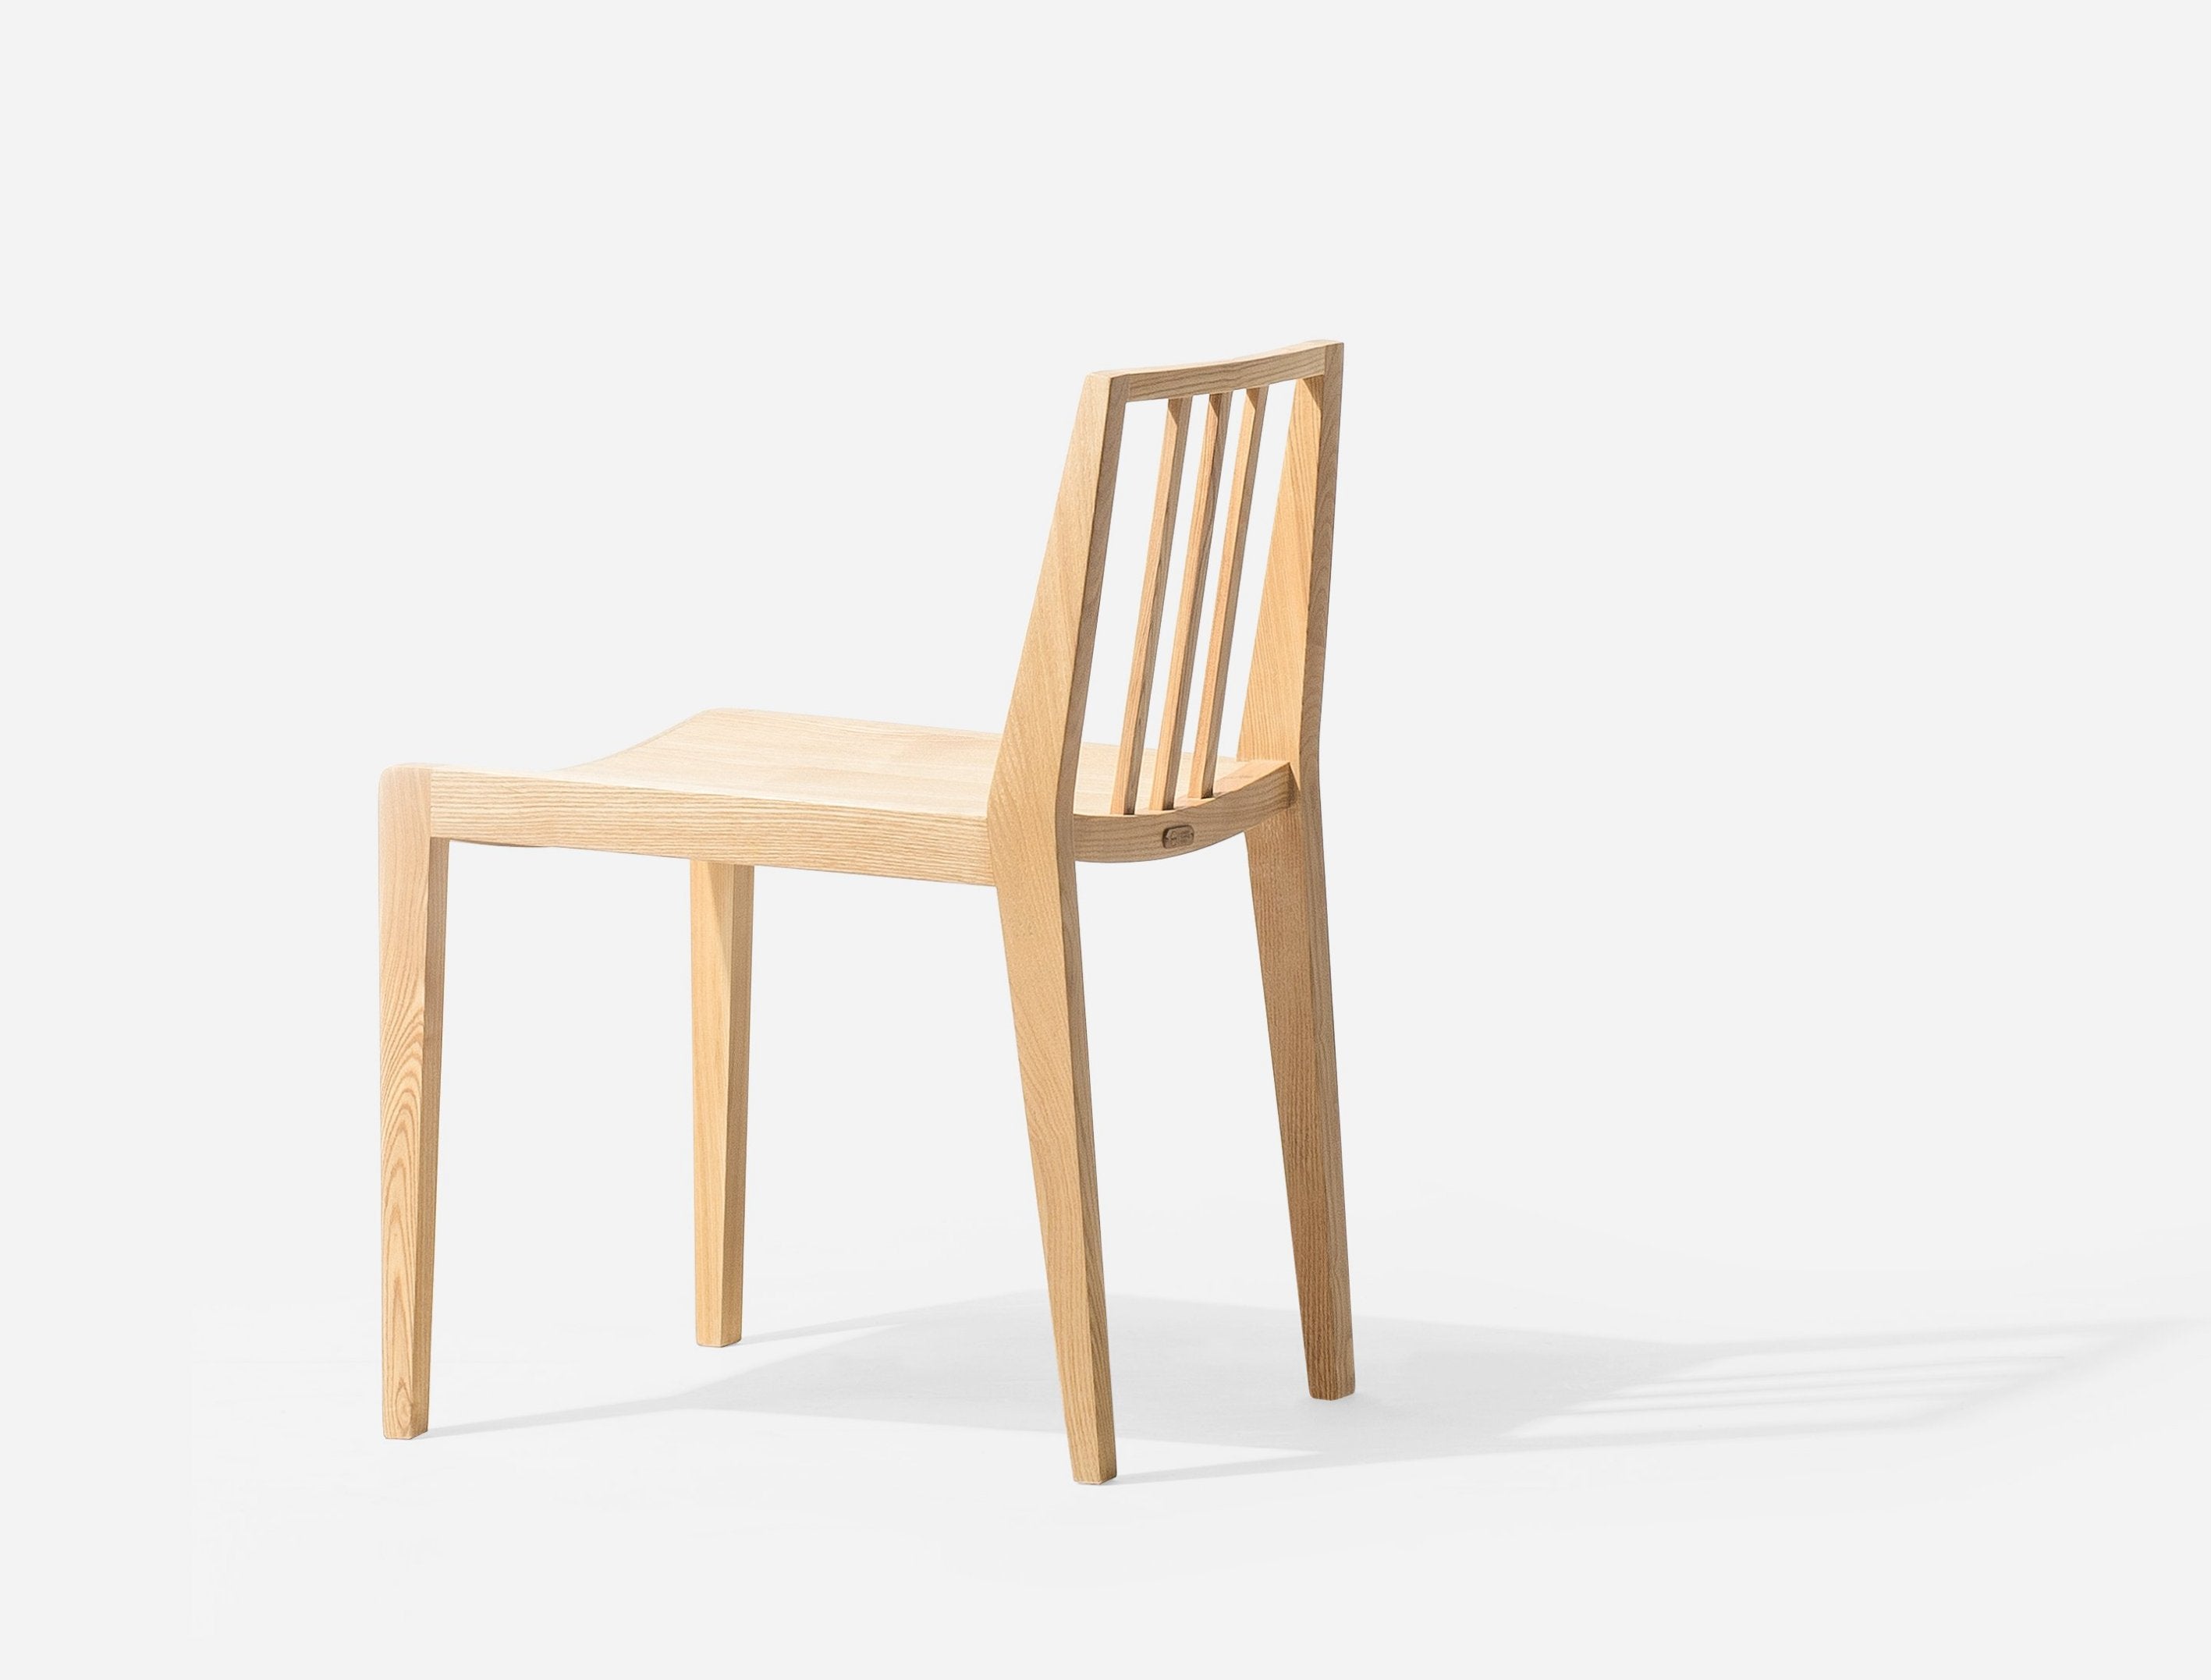 SIMPLE CHAIR Chair ziinlife Natural Oak